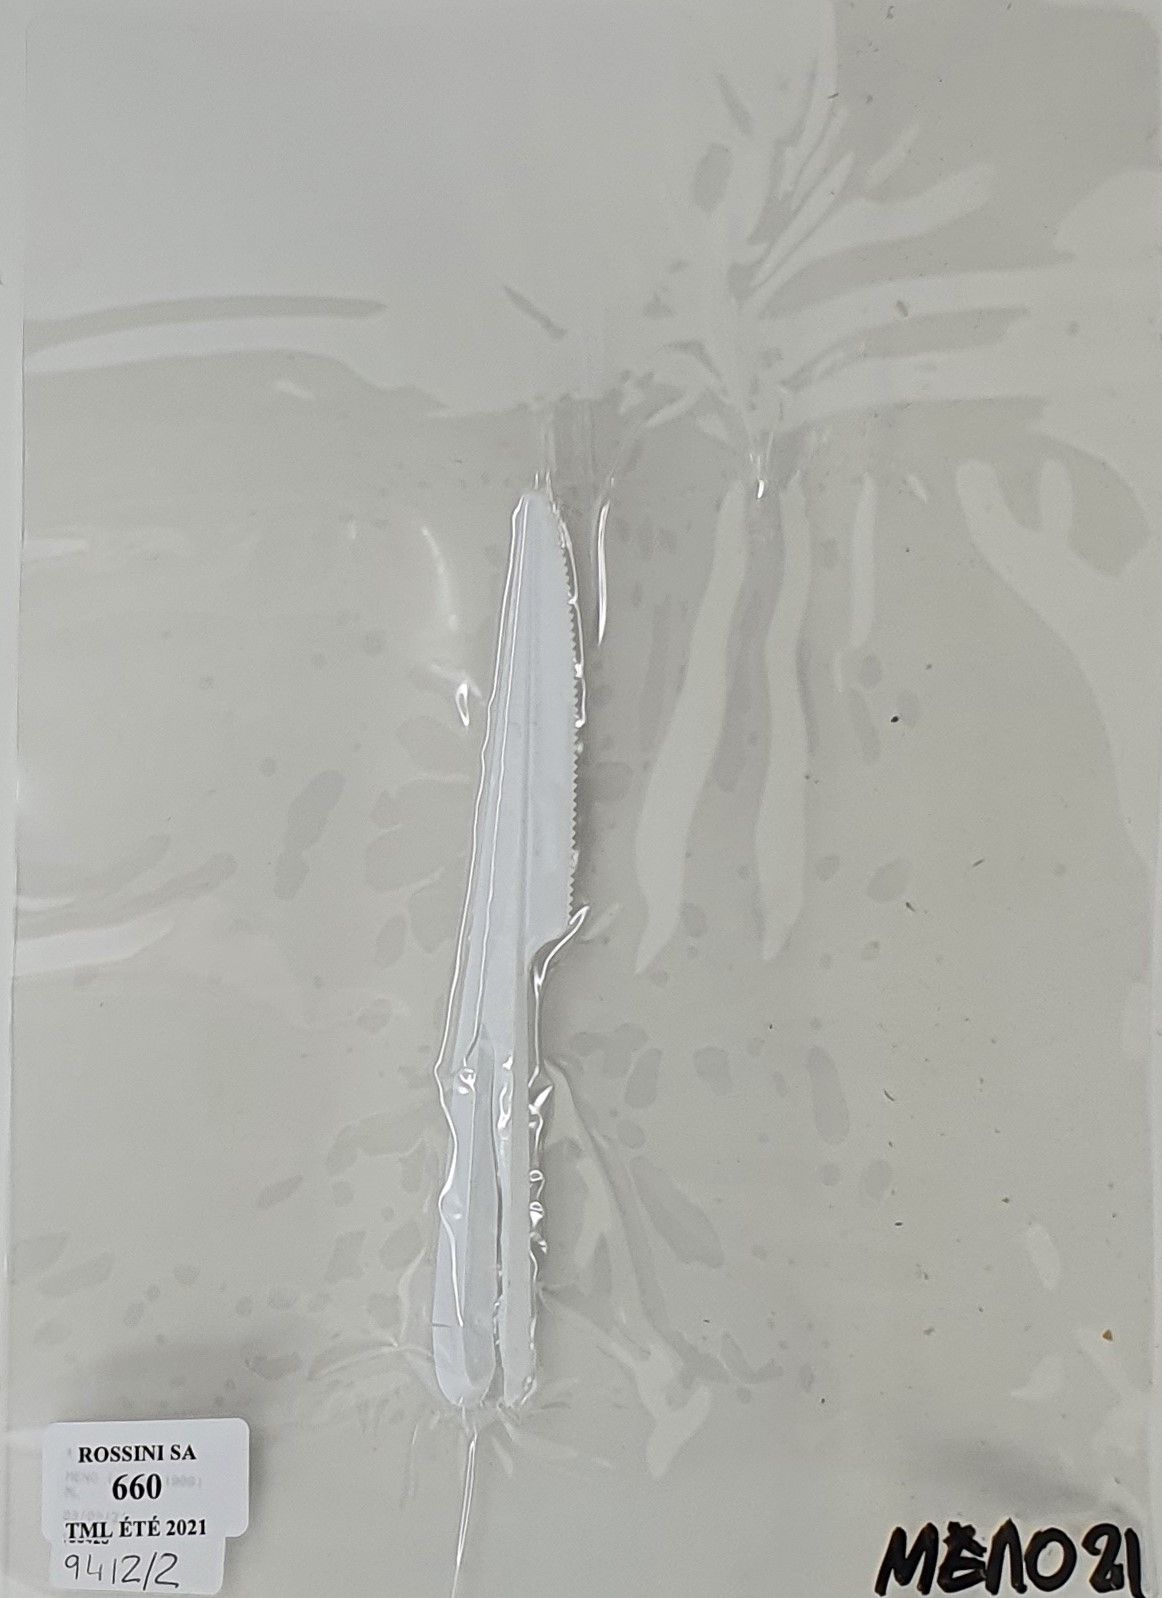 Null 梅诺（1989年出生

重新覆盖（用塑料），2021年

混合媒体，右下角有签名和日期

30 x 21.5 厘米